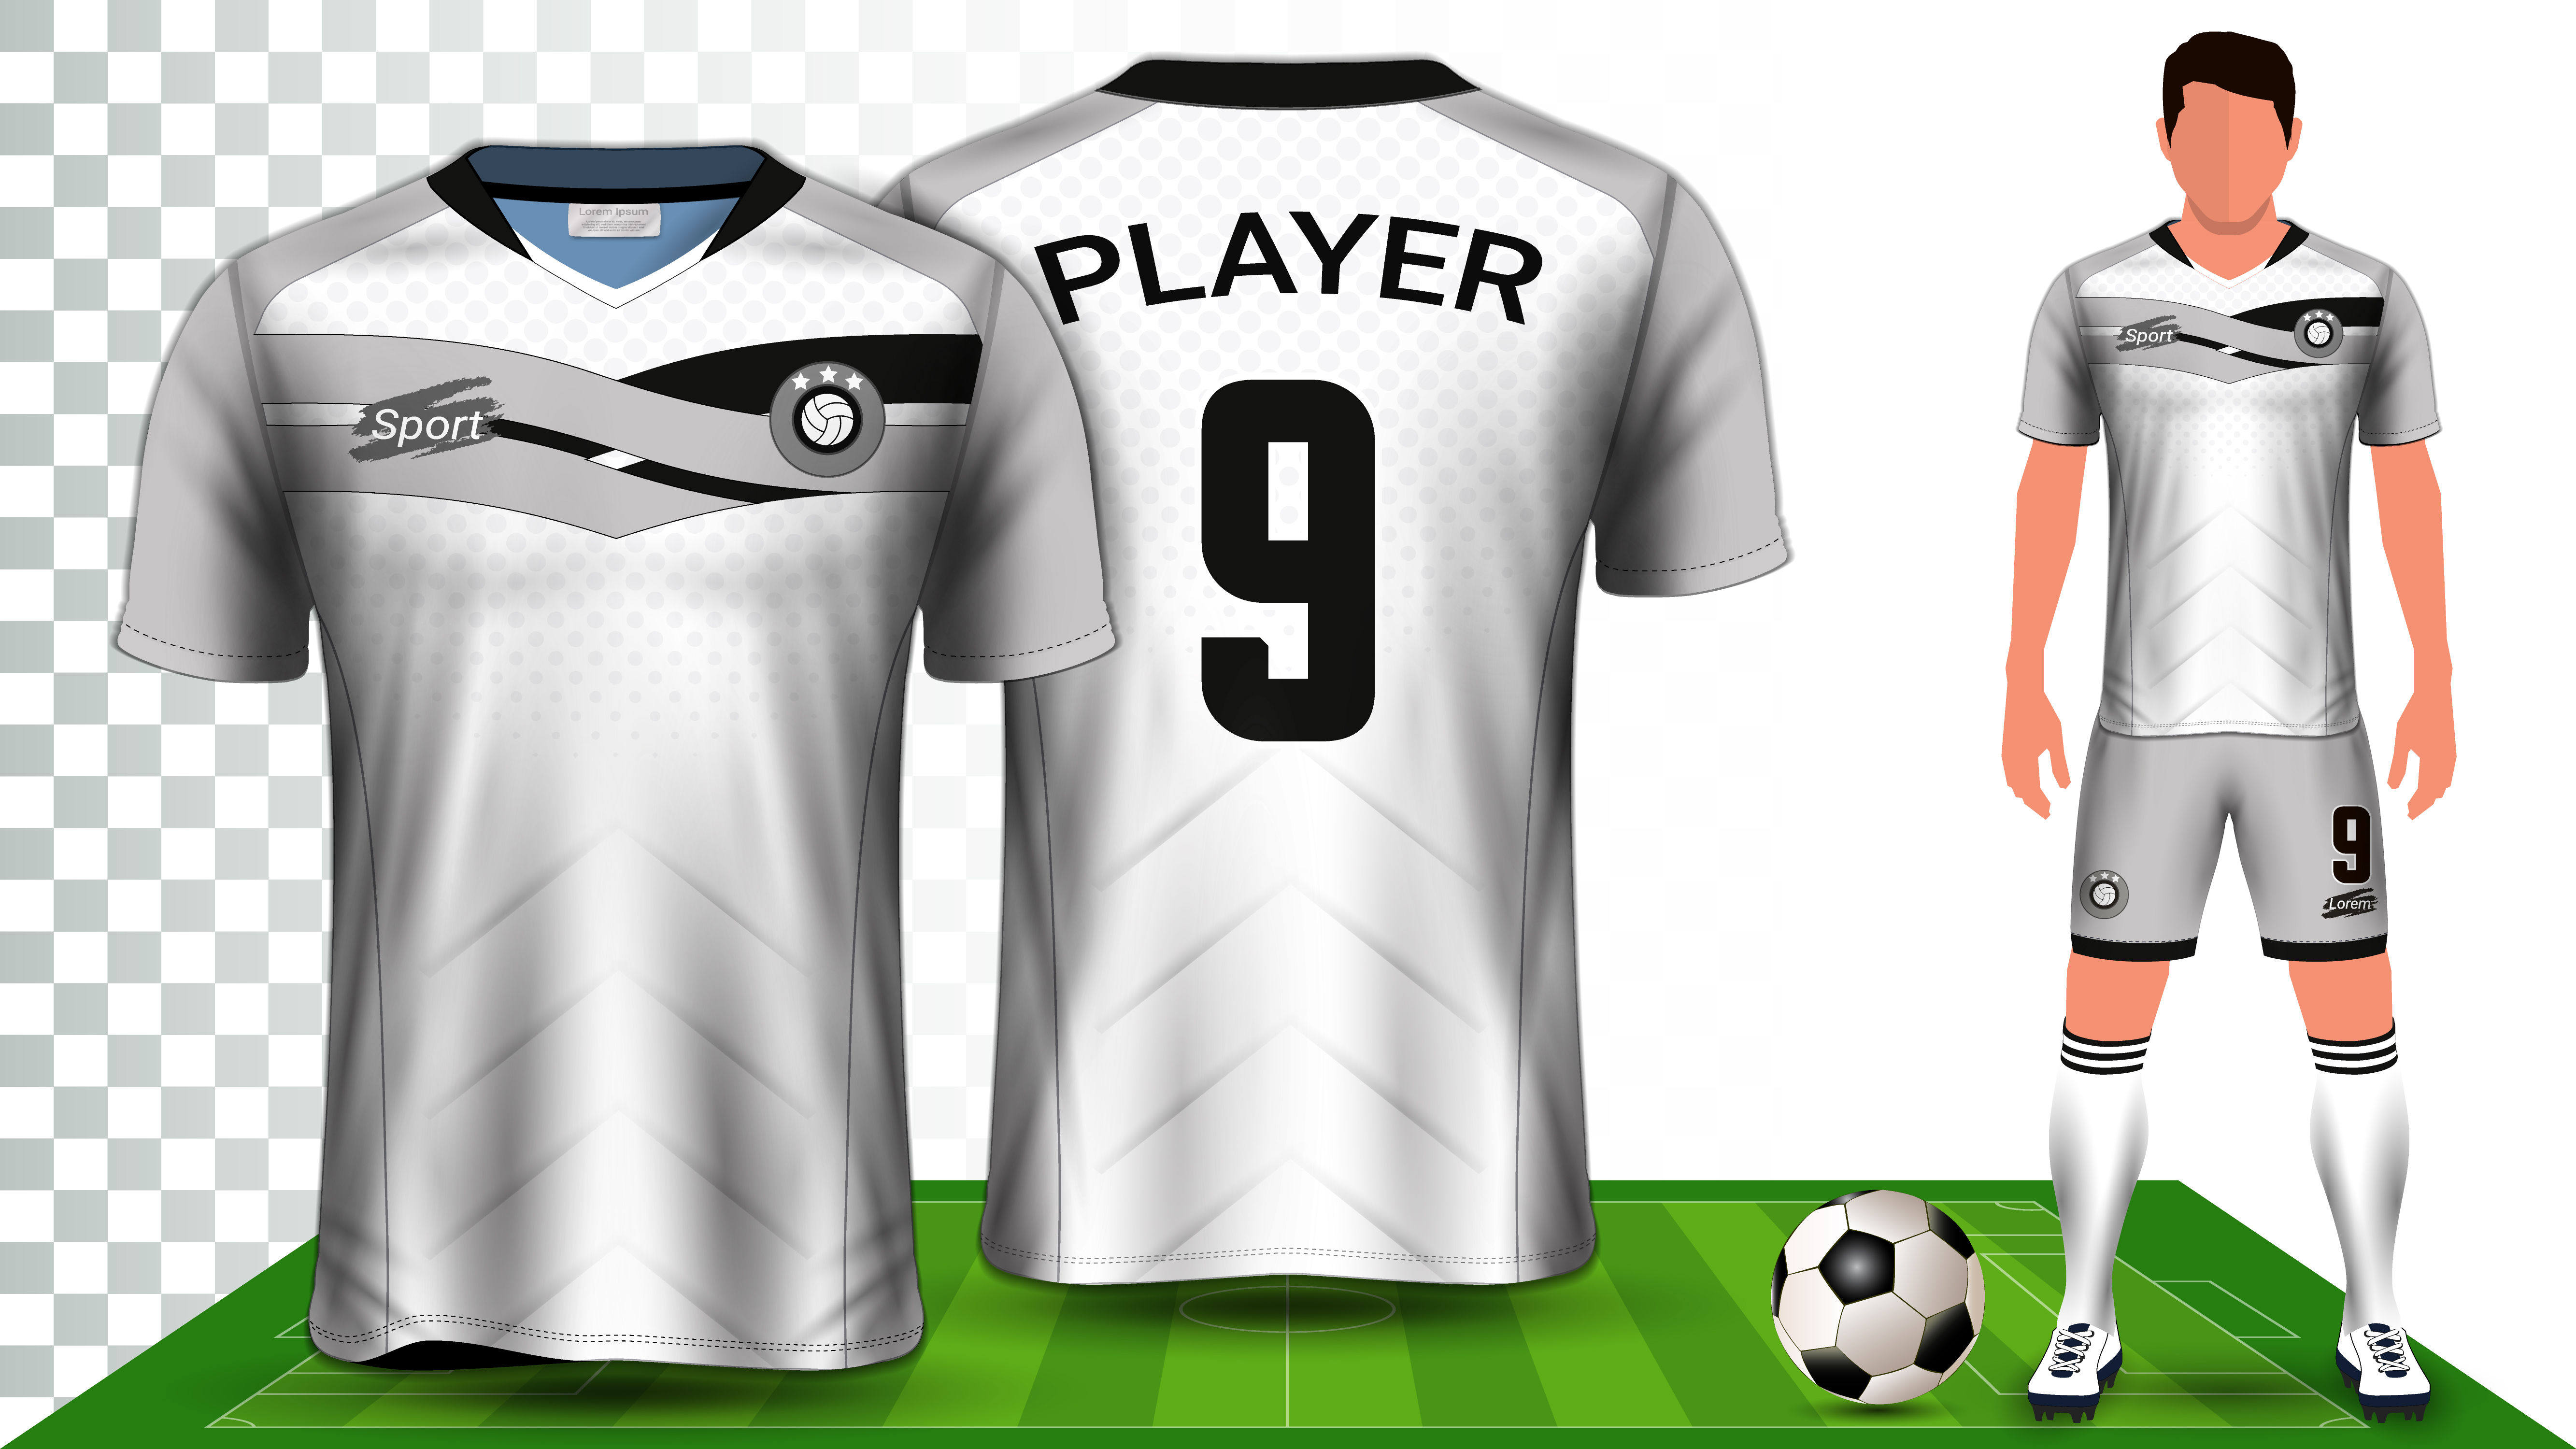 Download Soccer Jersey, Sport Shirt or Football Kit Uniform Presentation Mockup Template. - Download Free ...